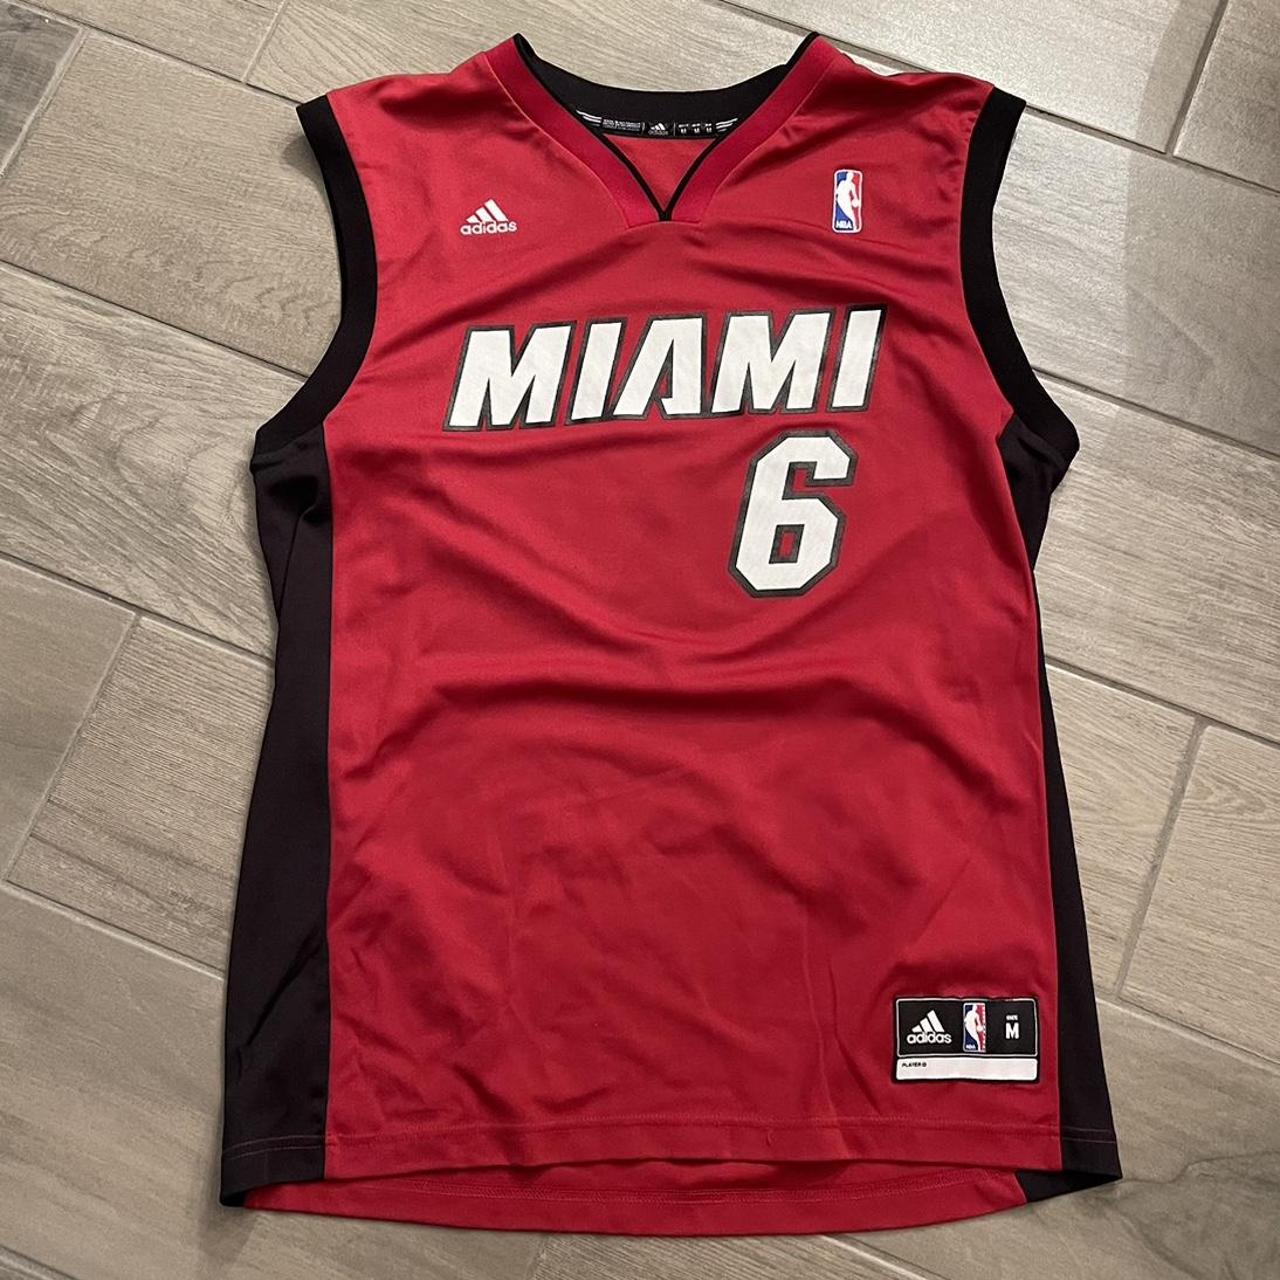 Adidas Vintage Adidas LeBron James Miami Heat jersey